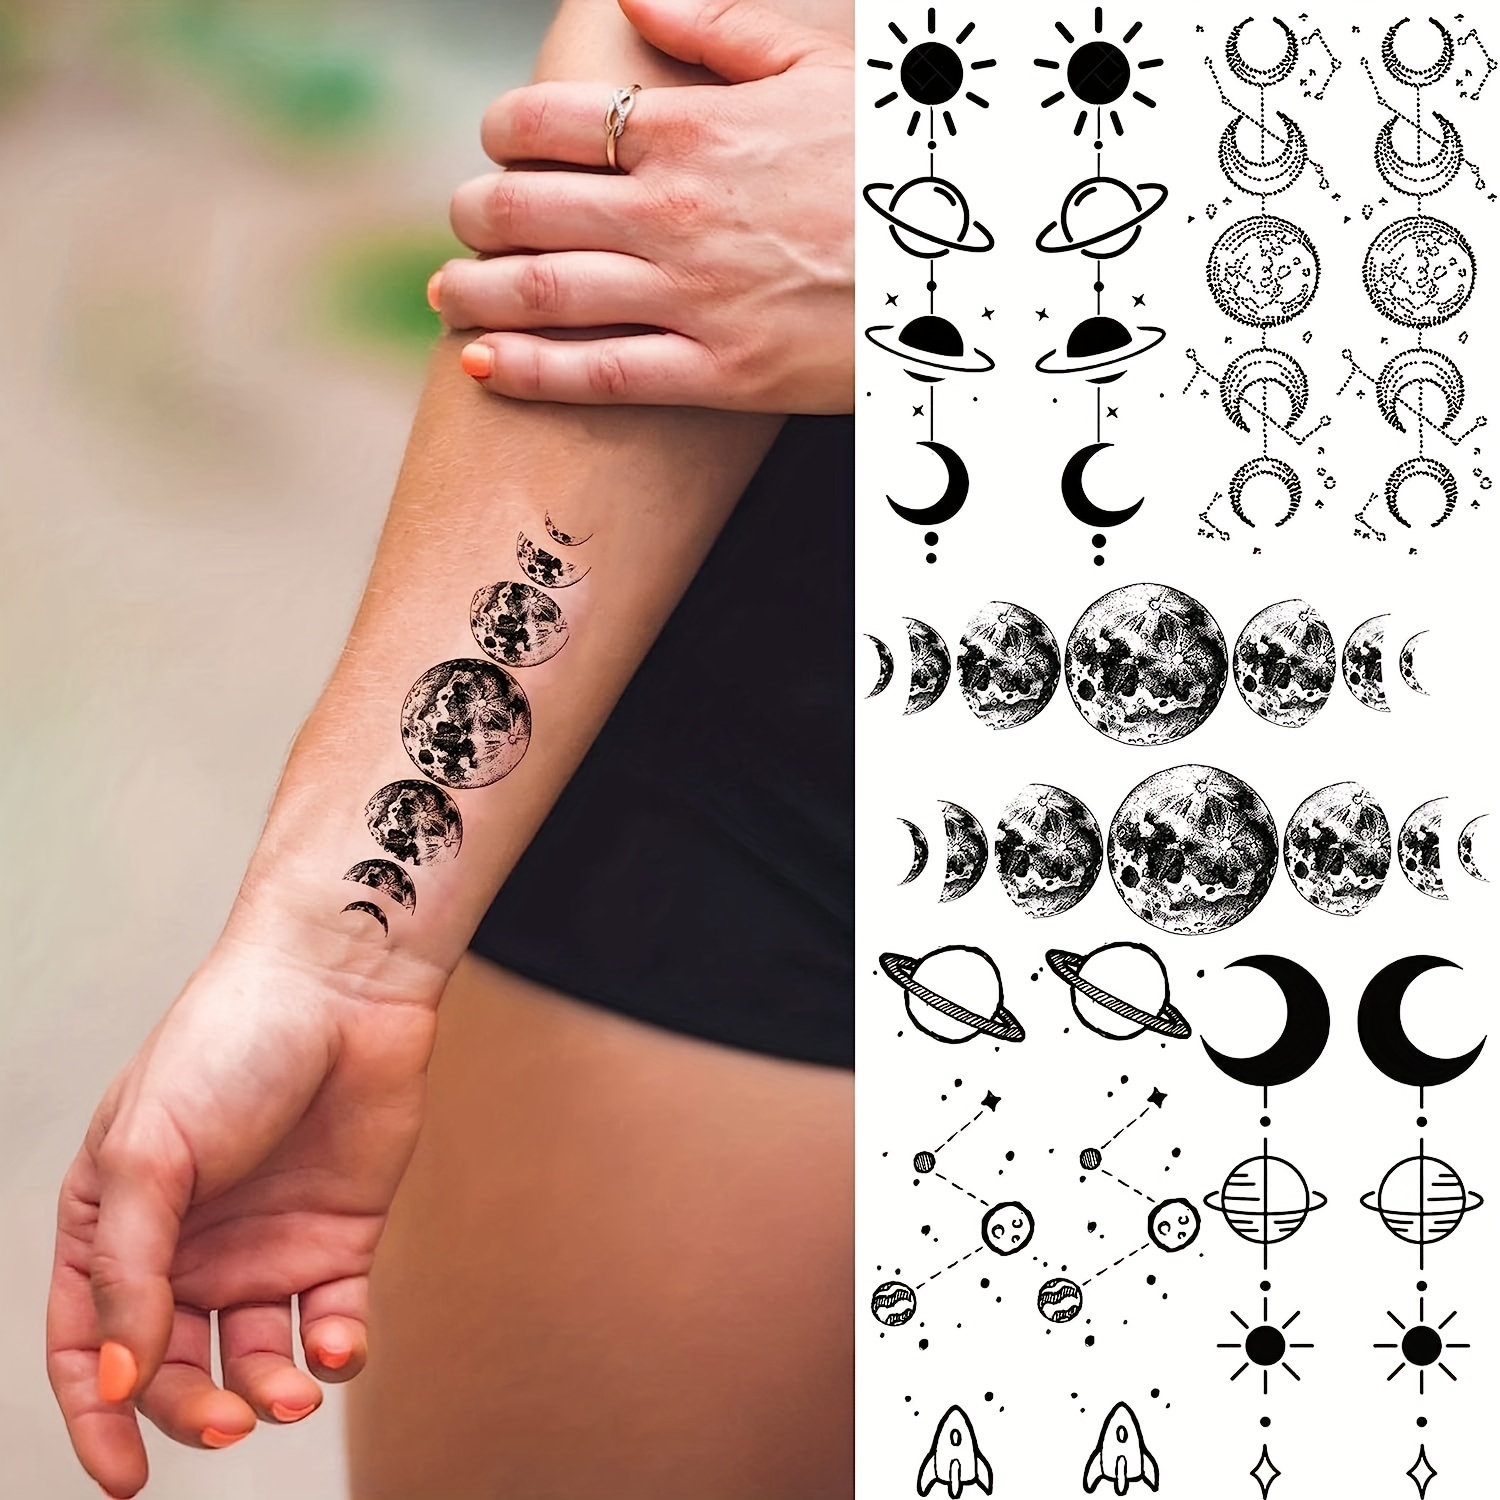 star tattoo designs for men on neck